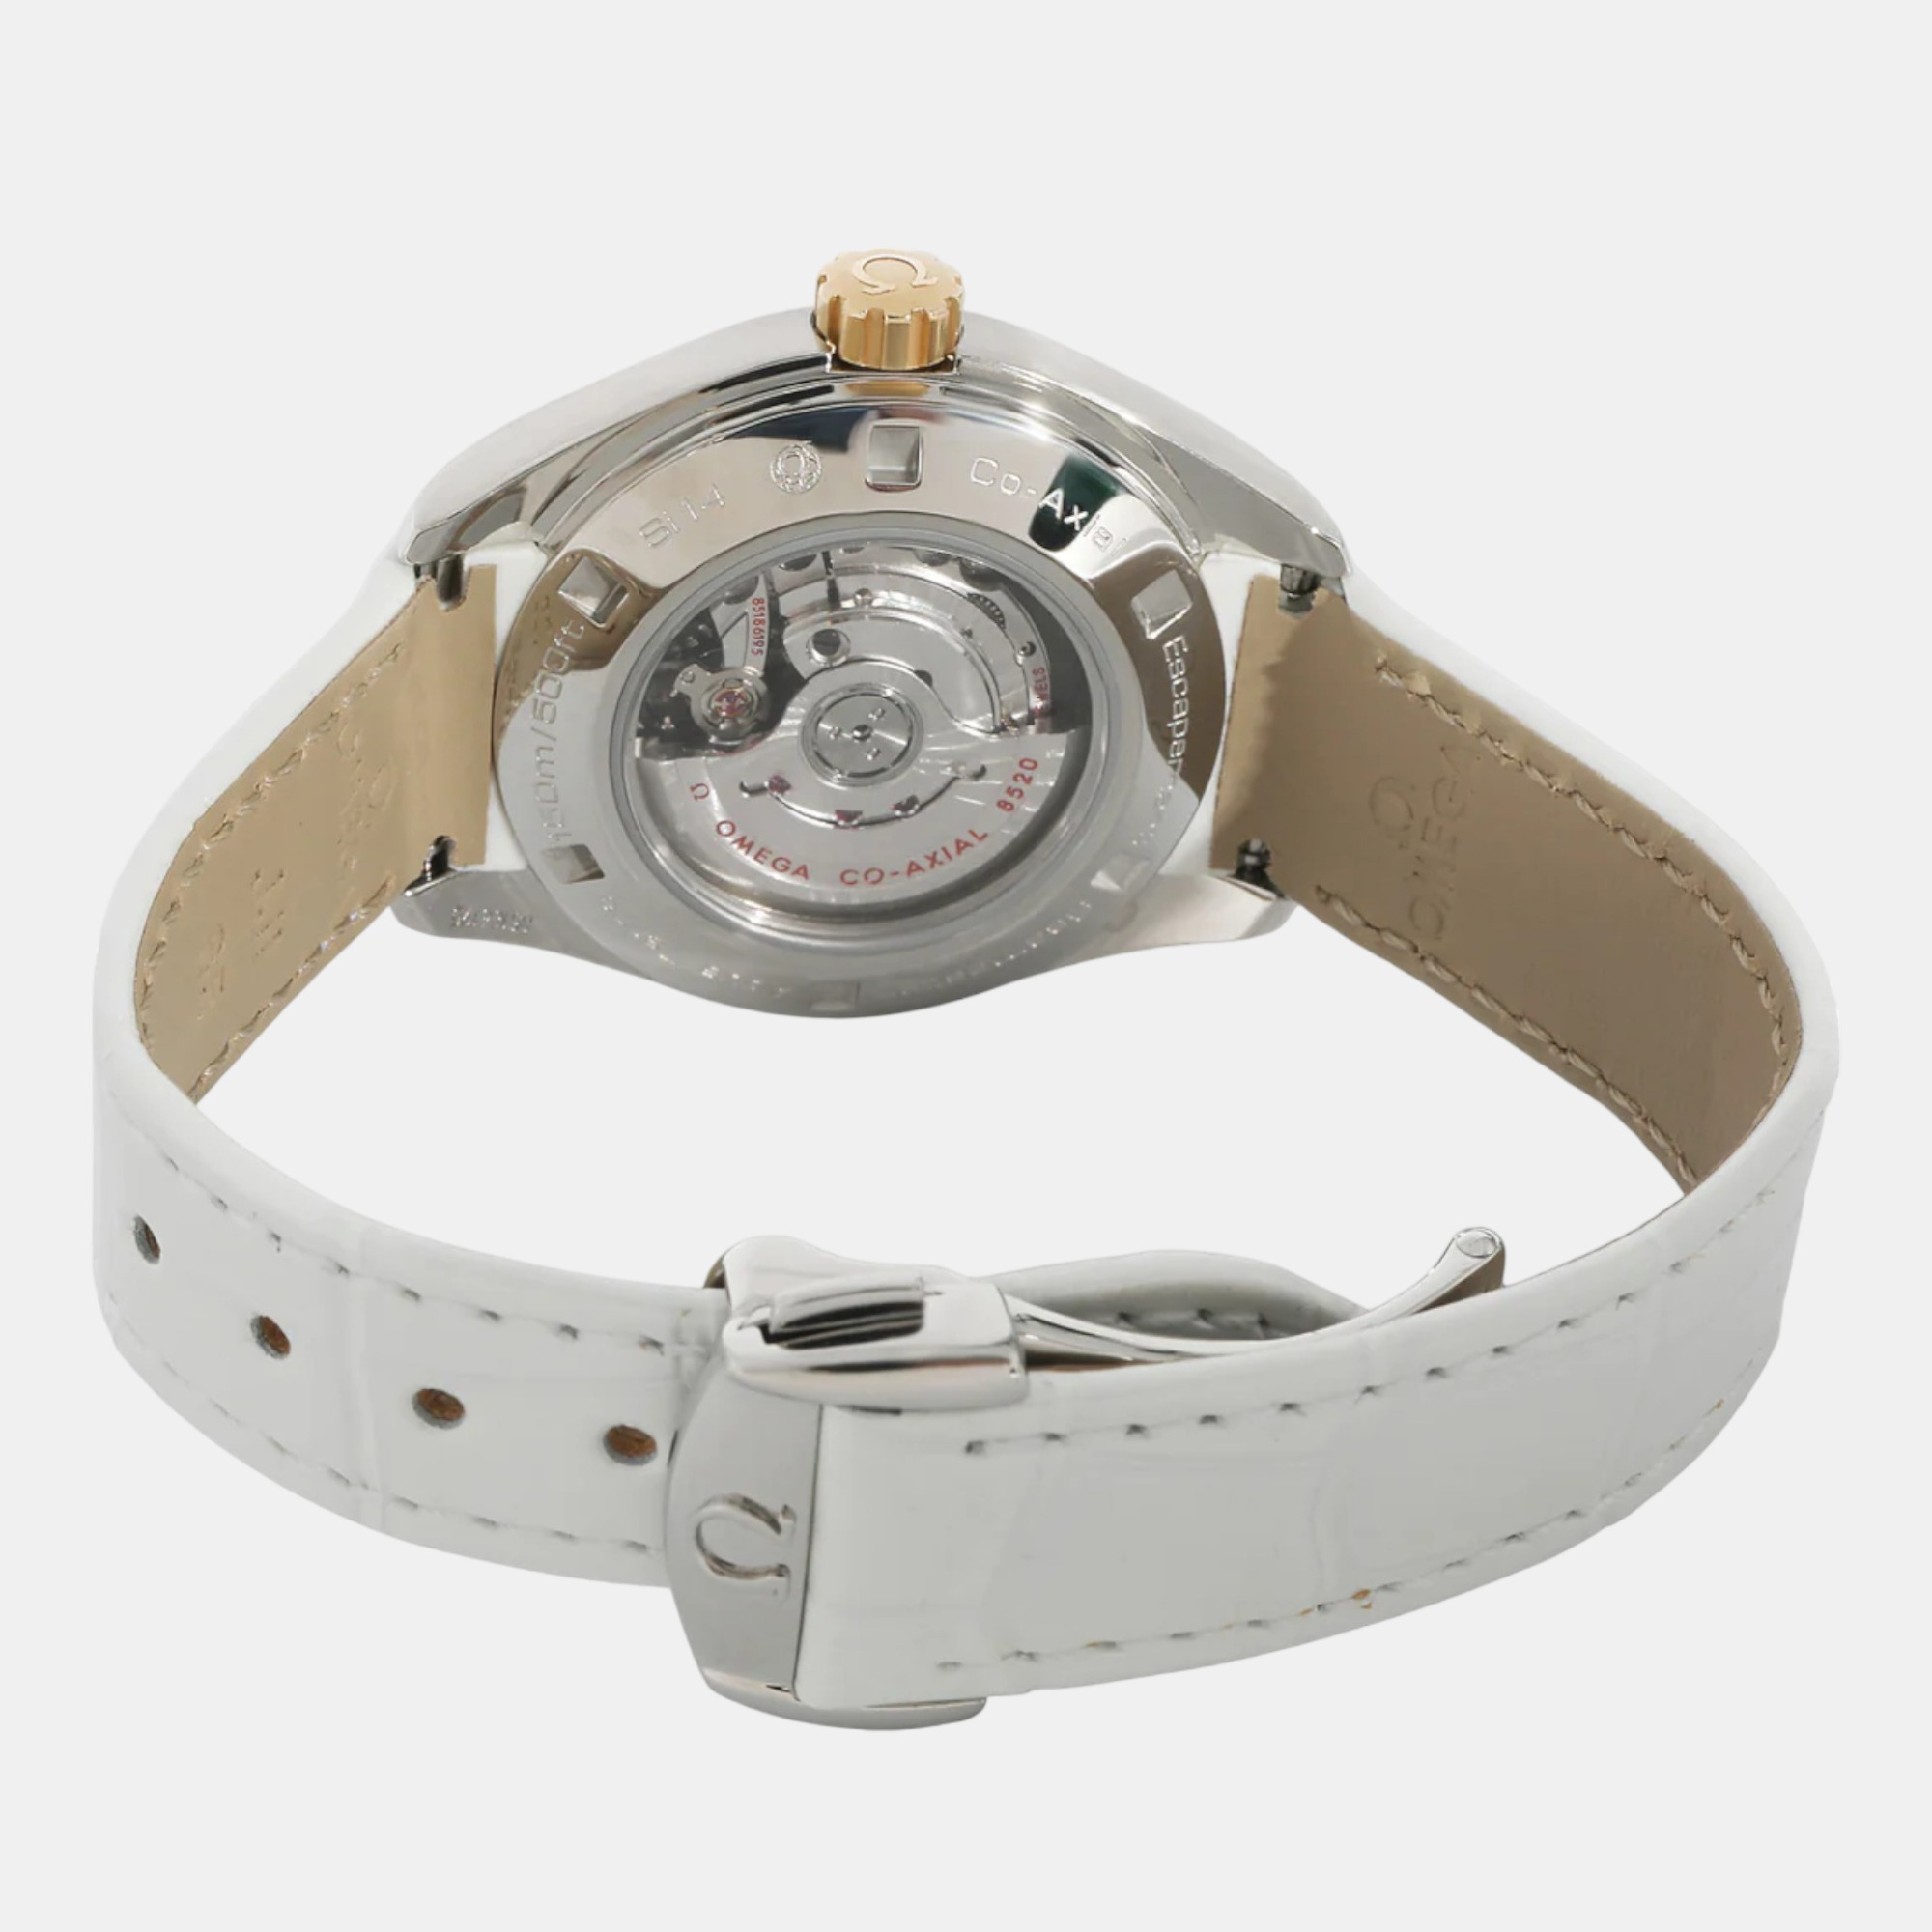 Omega Silver Diamonds 18K Rose Gold And Stainless Steel Seamaster Aqua Terra 231.28.34.20.55.001 Women's Wristwatch 34 Mm